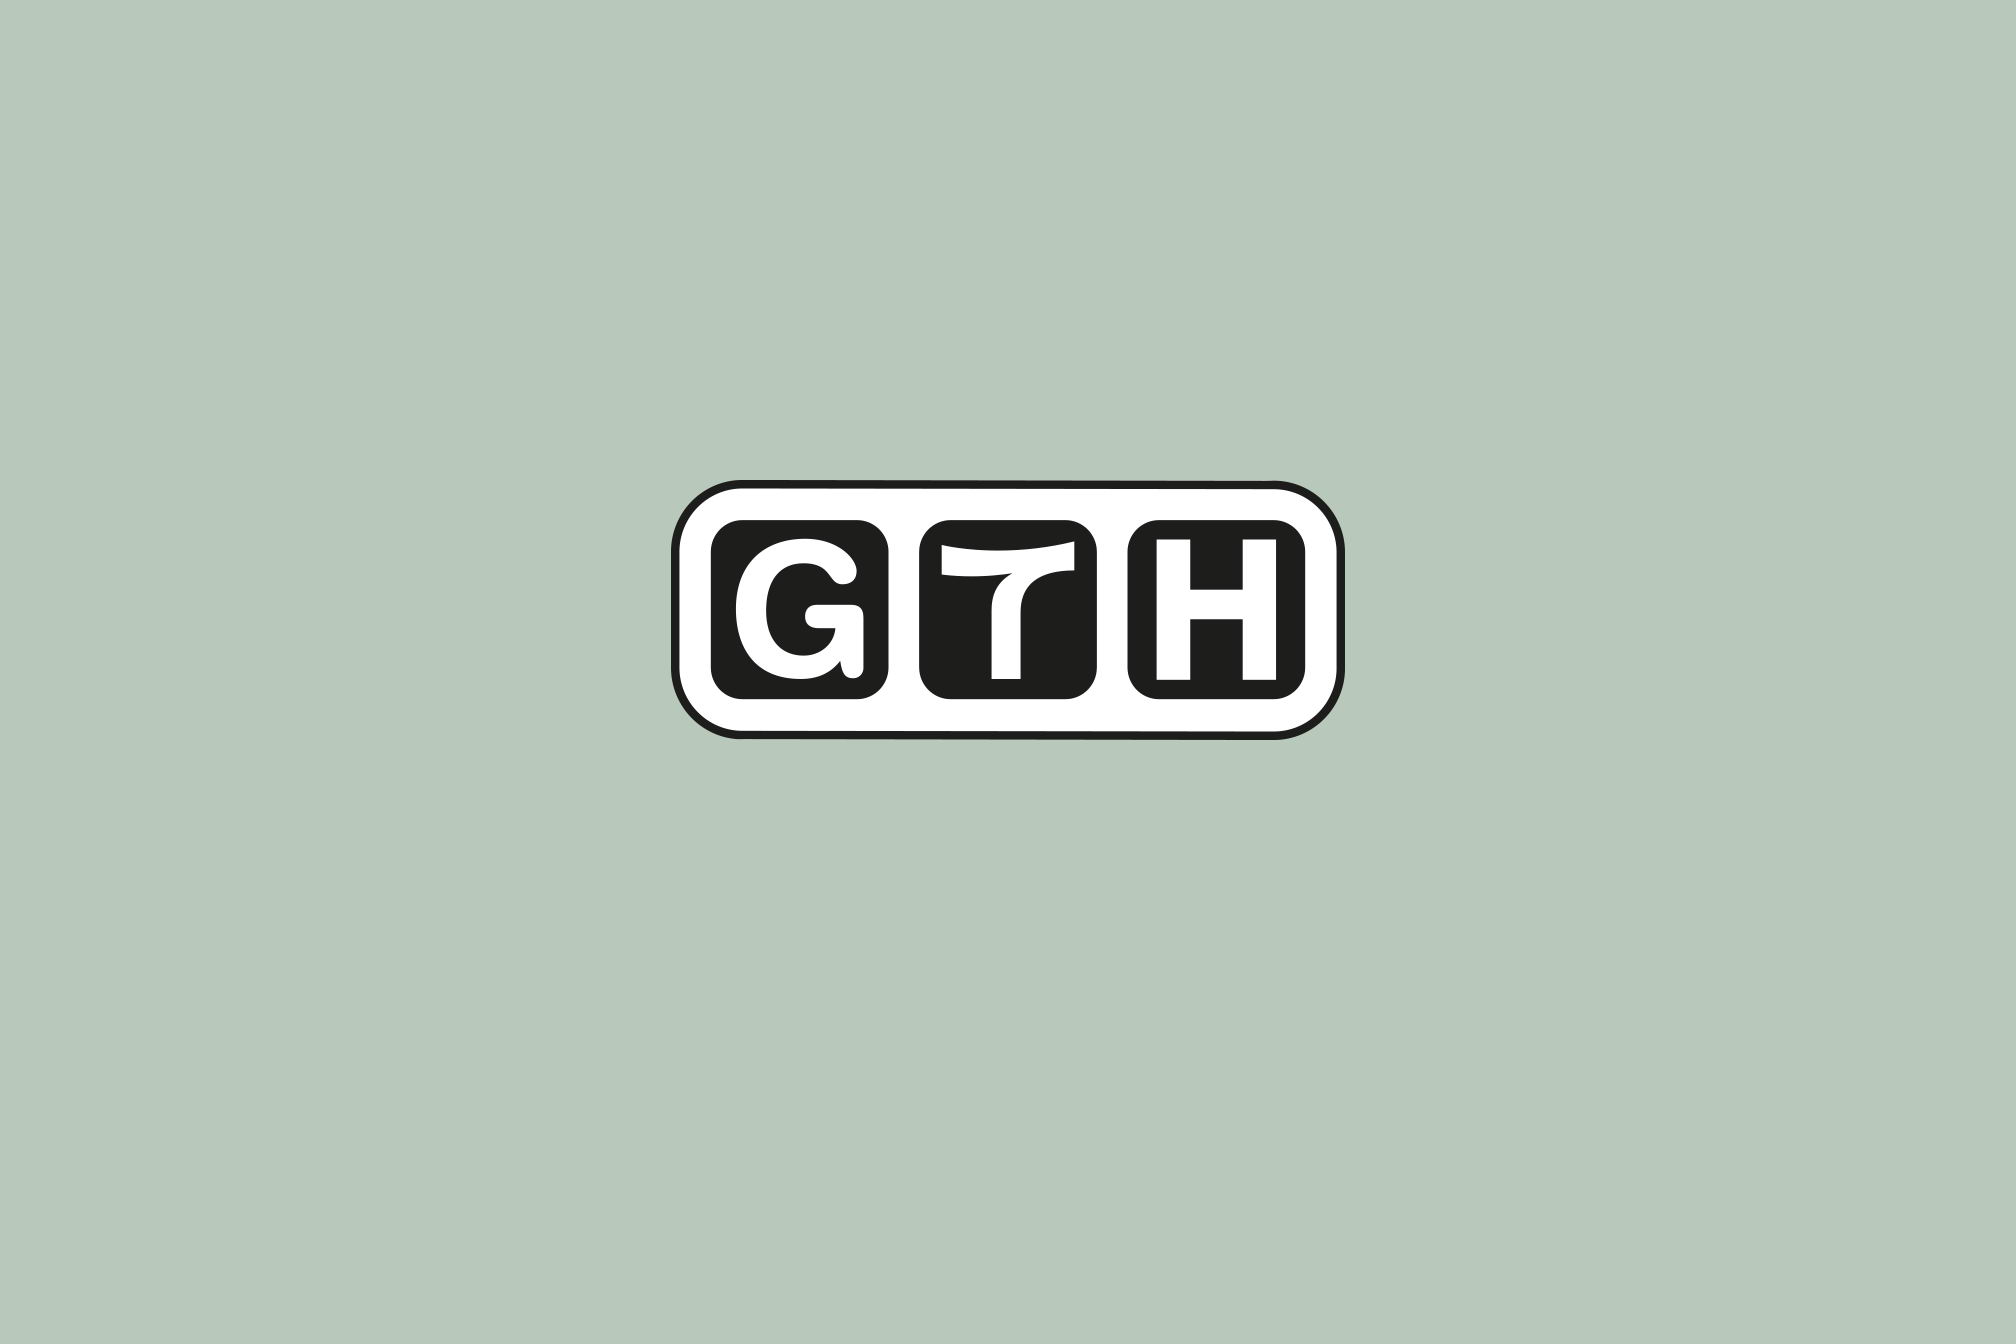 GTH-img